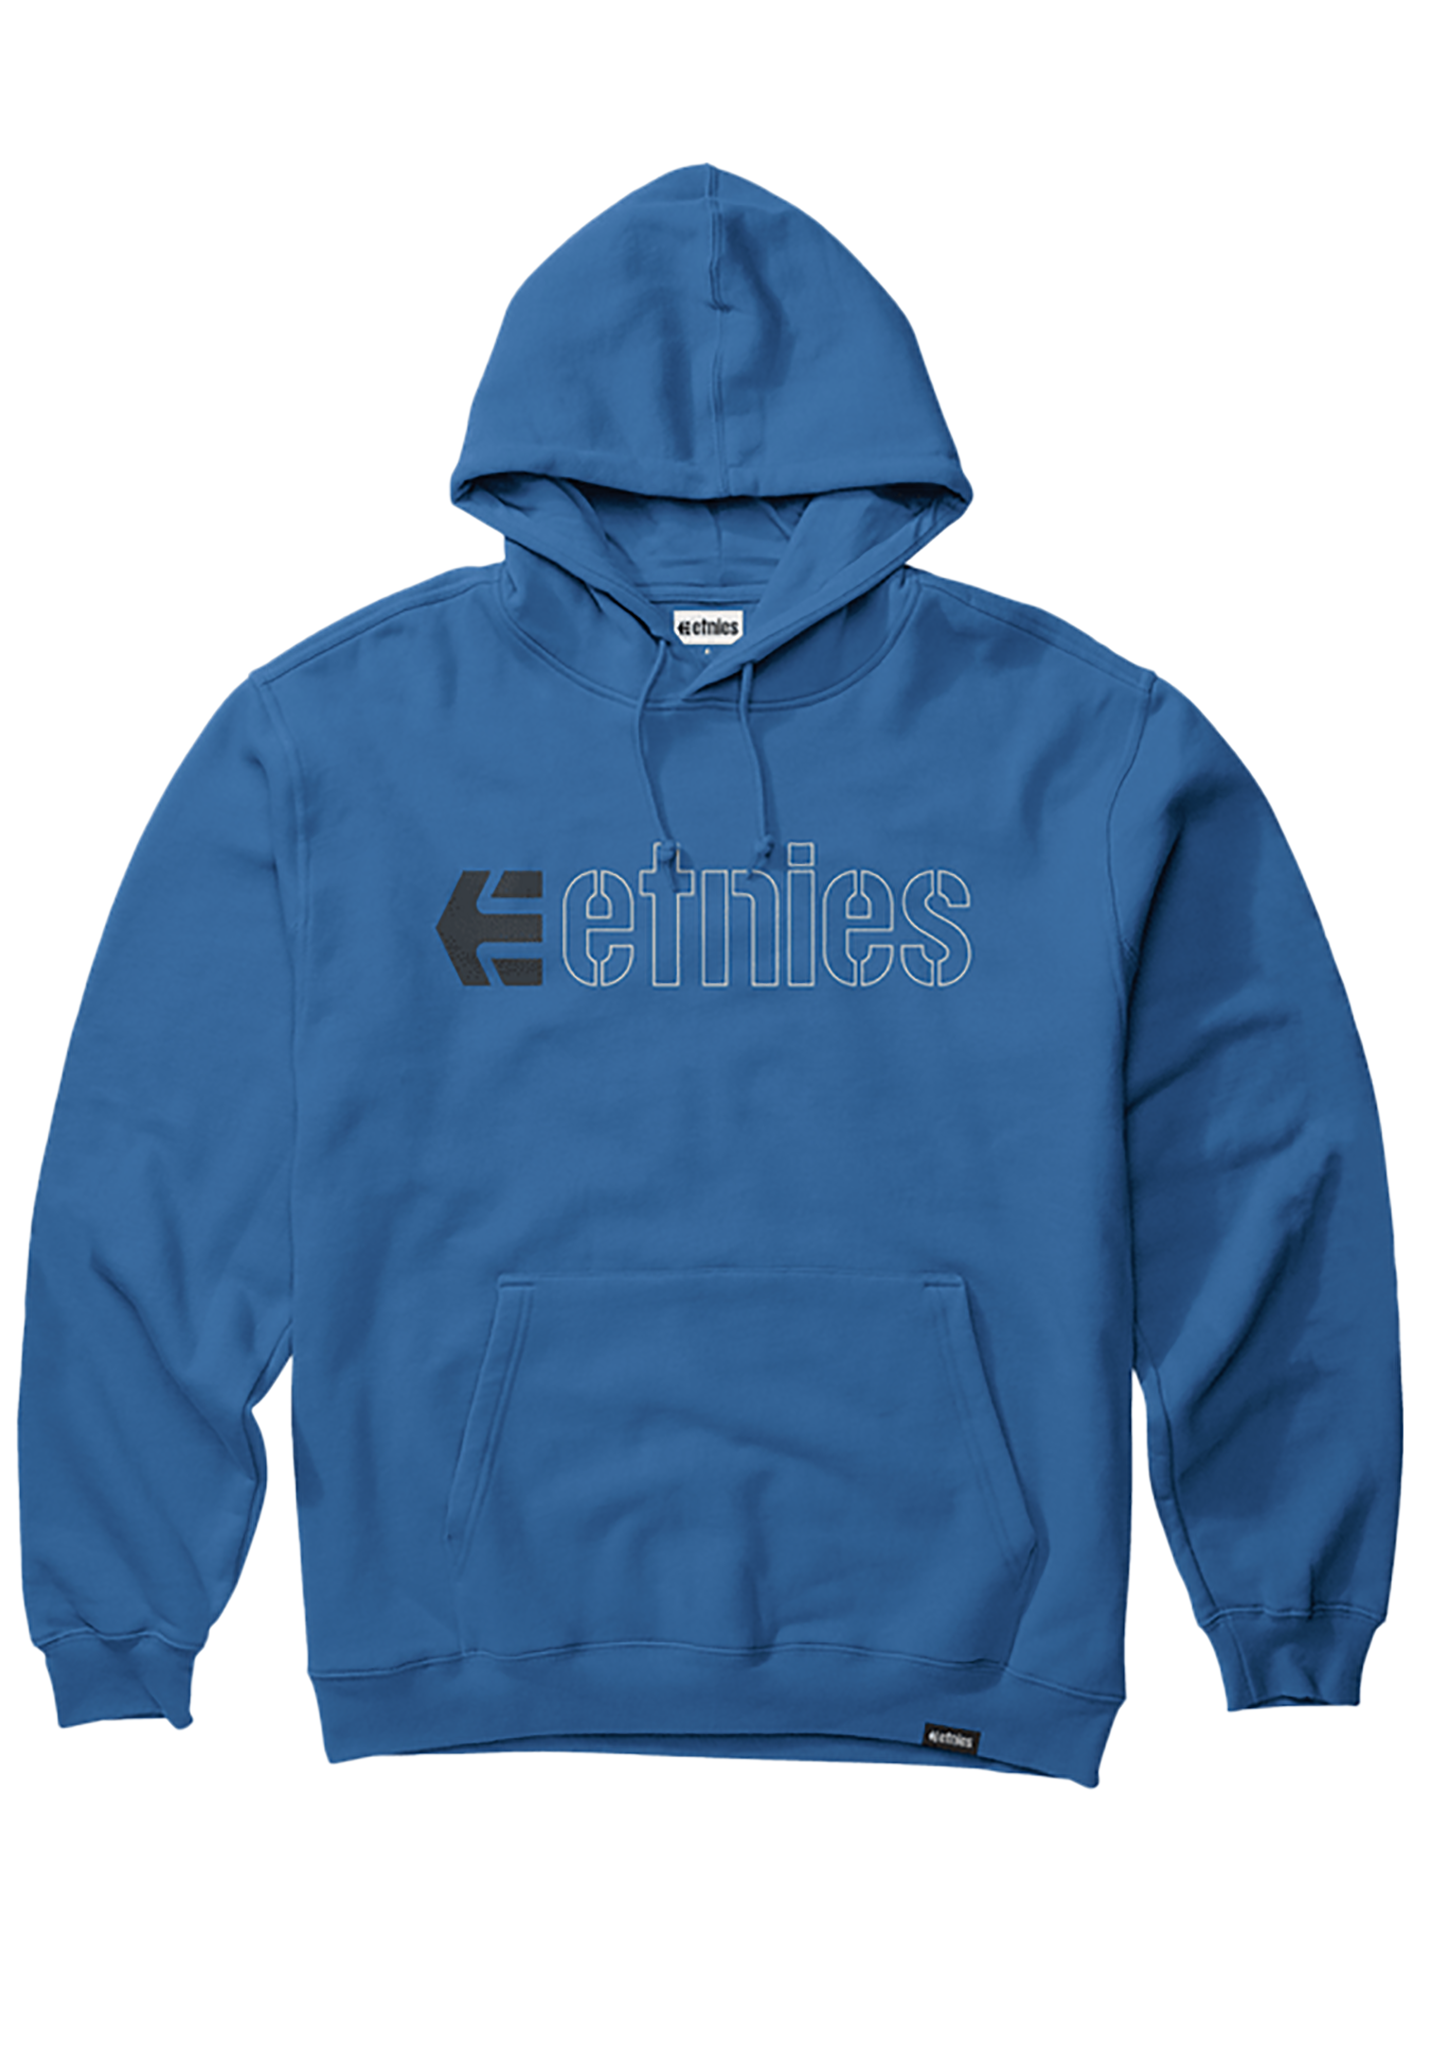 Etnies Ecorp Hoodie blau/weiß/marineblau XL